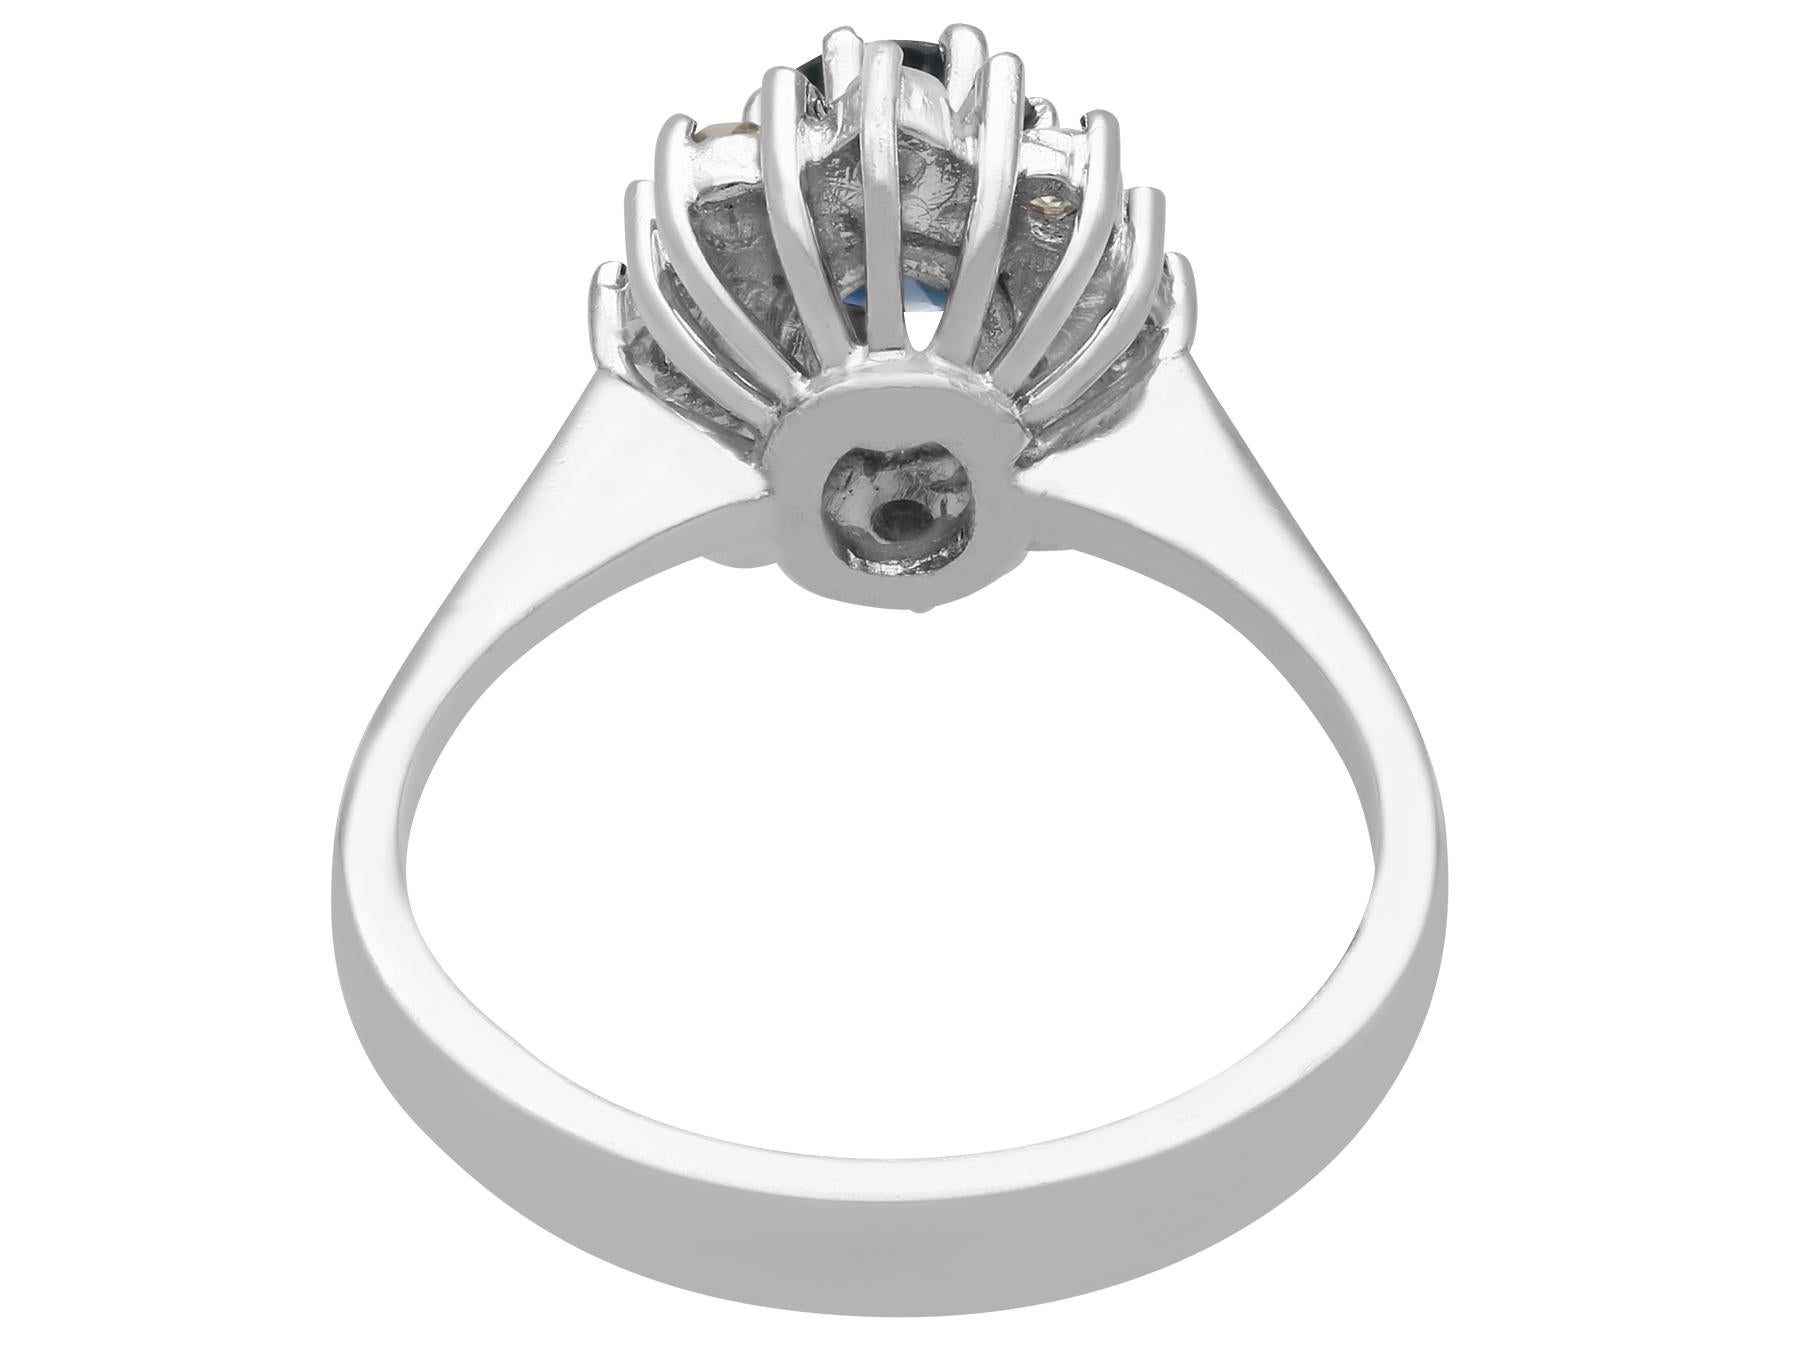 1970s sapphire and diamond ring